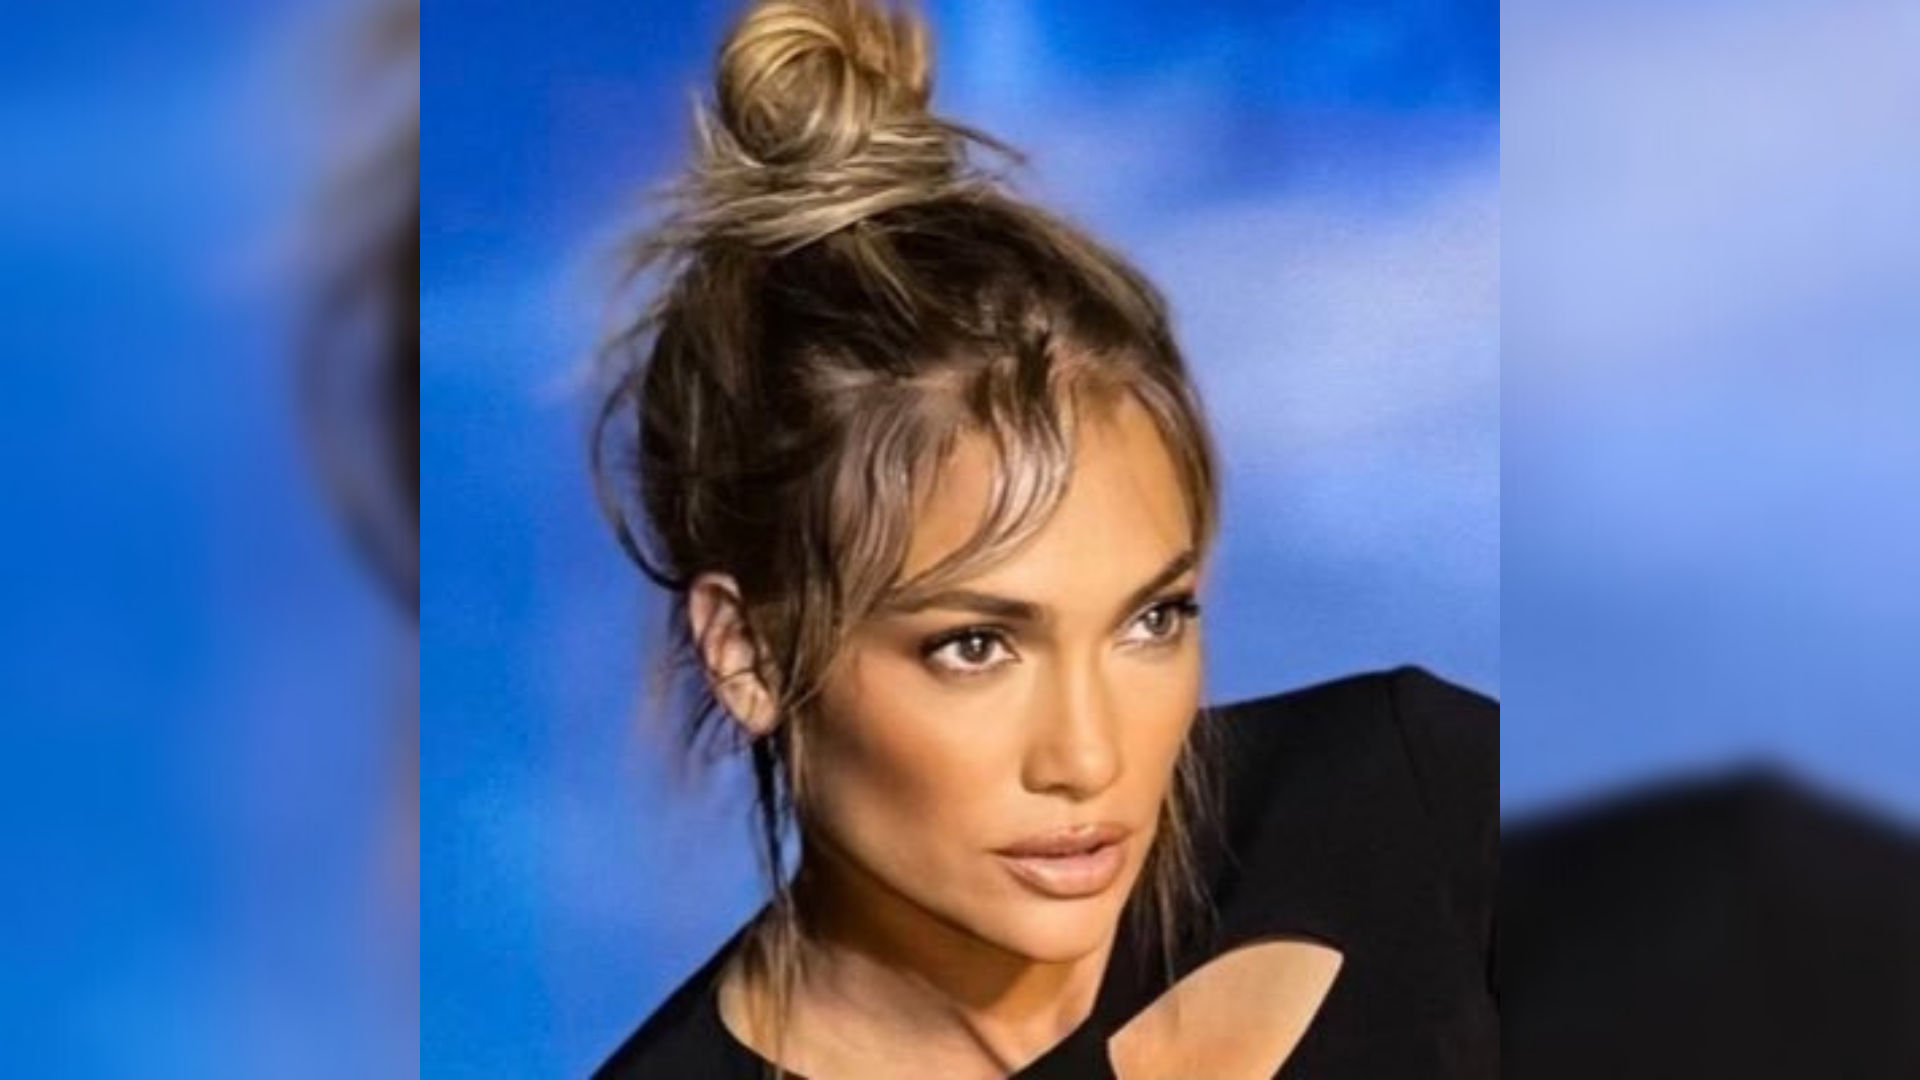 Jennifer Lopez, Alex Rodriguez split, saying ‘we are better as friends’